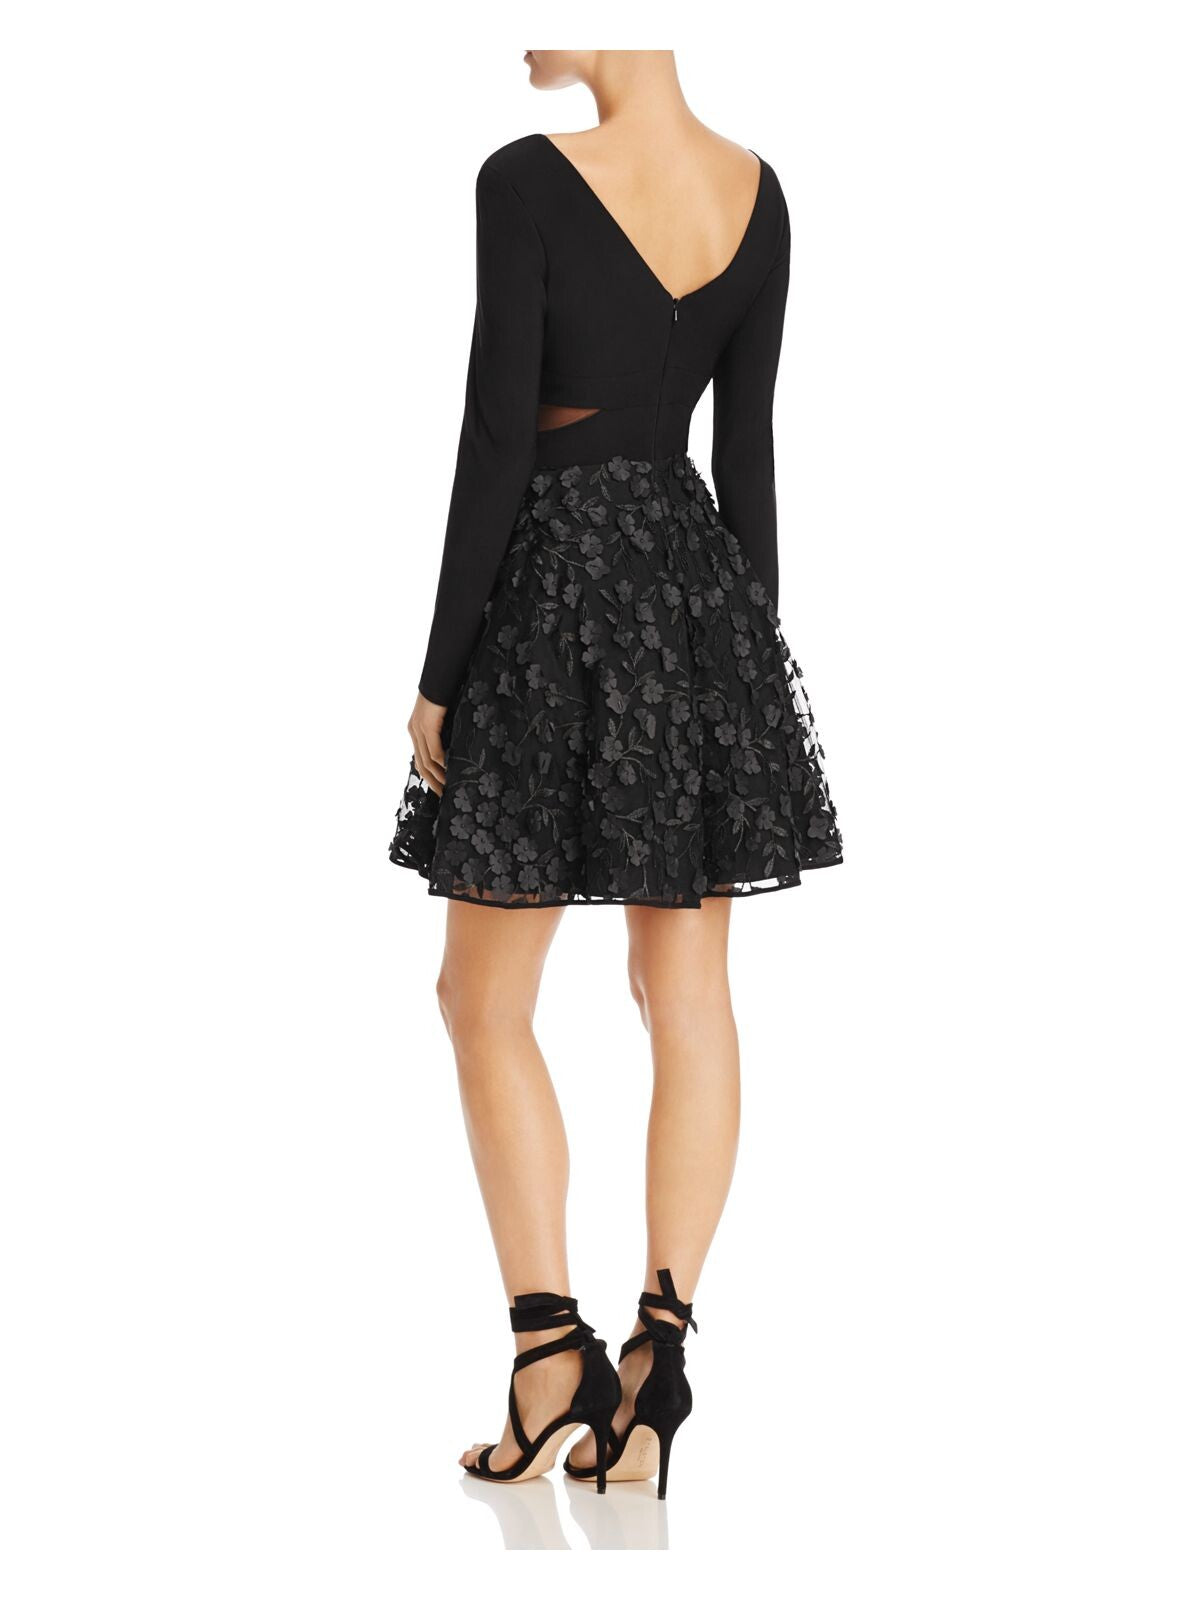 AQUA FORMAL Womens Black Sheer Zippered Floral Applique Long Sleeve V Neck Short Party Fit + Flare Dress 12